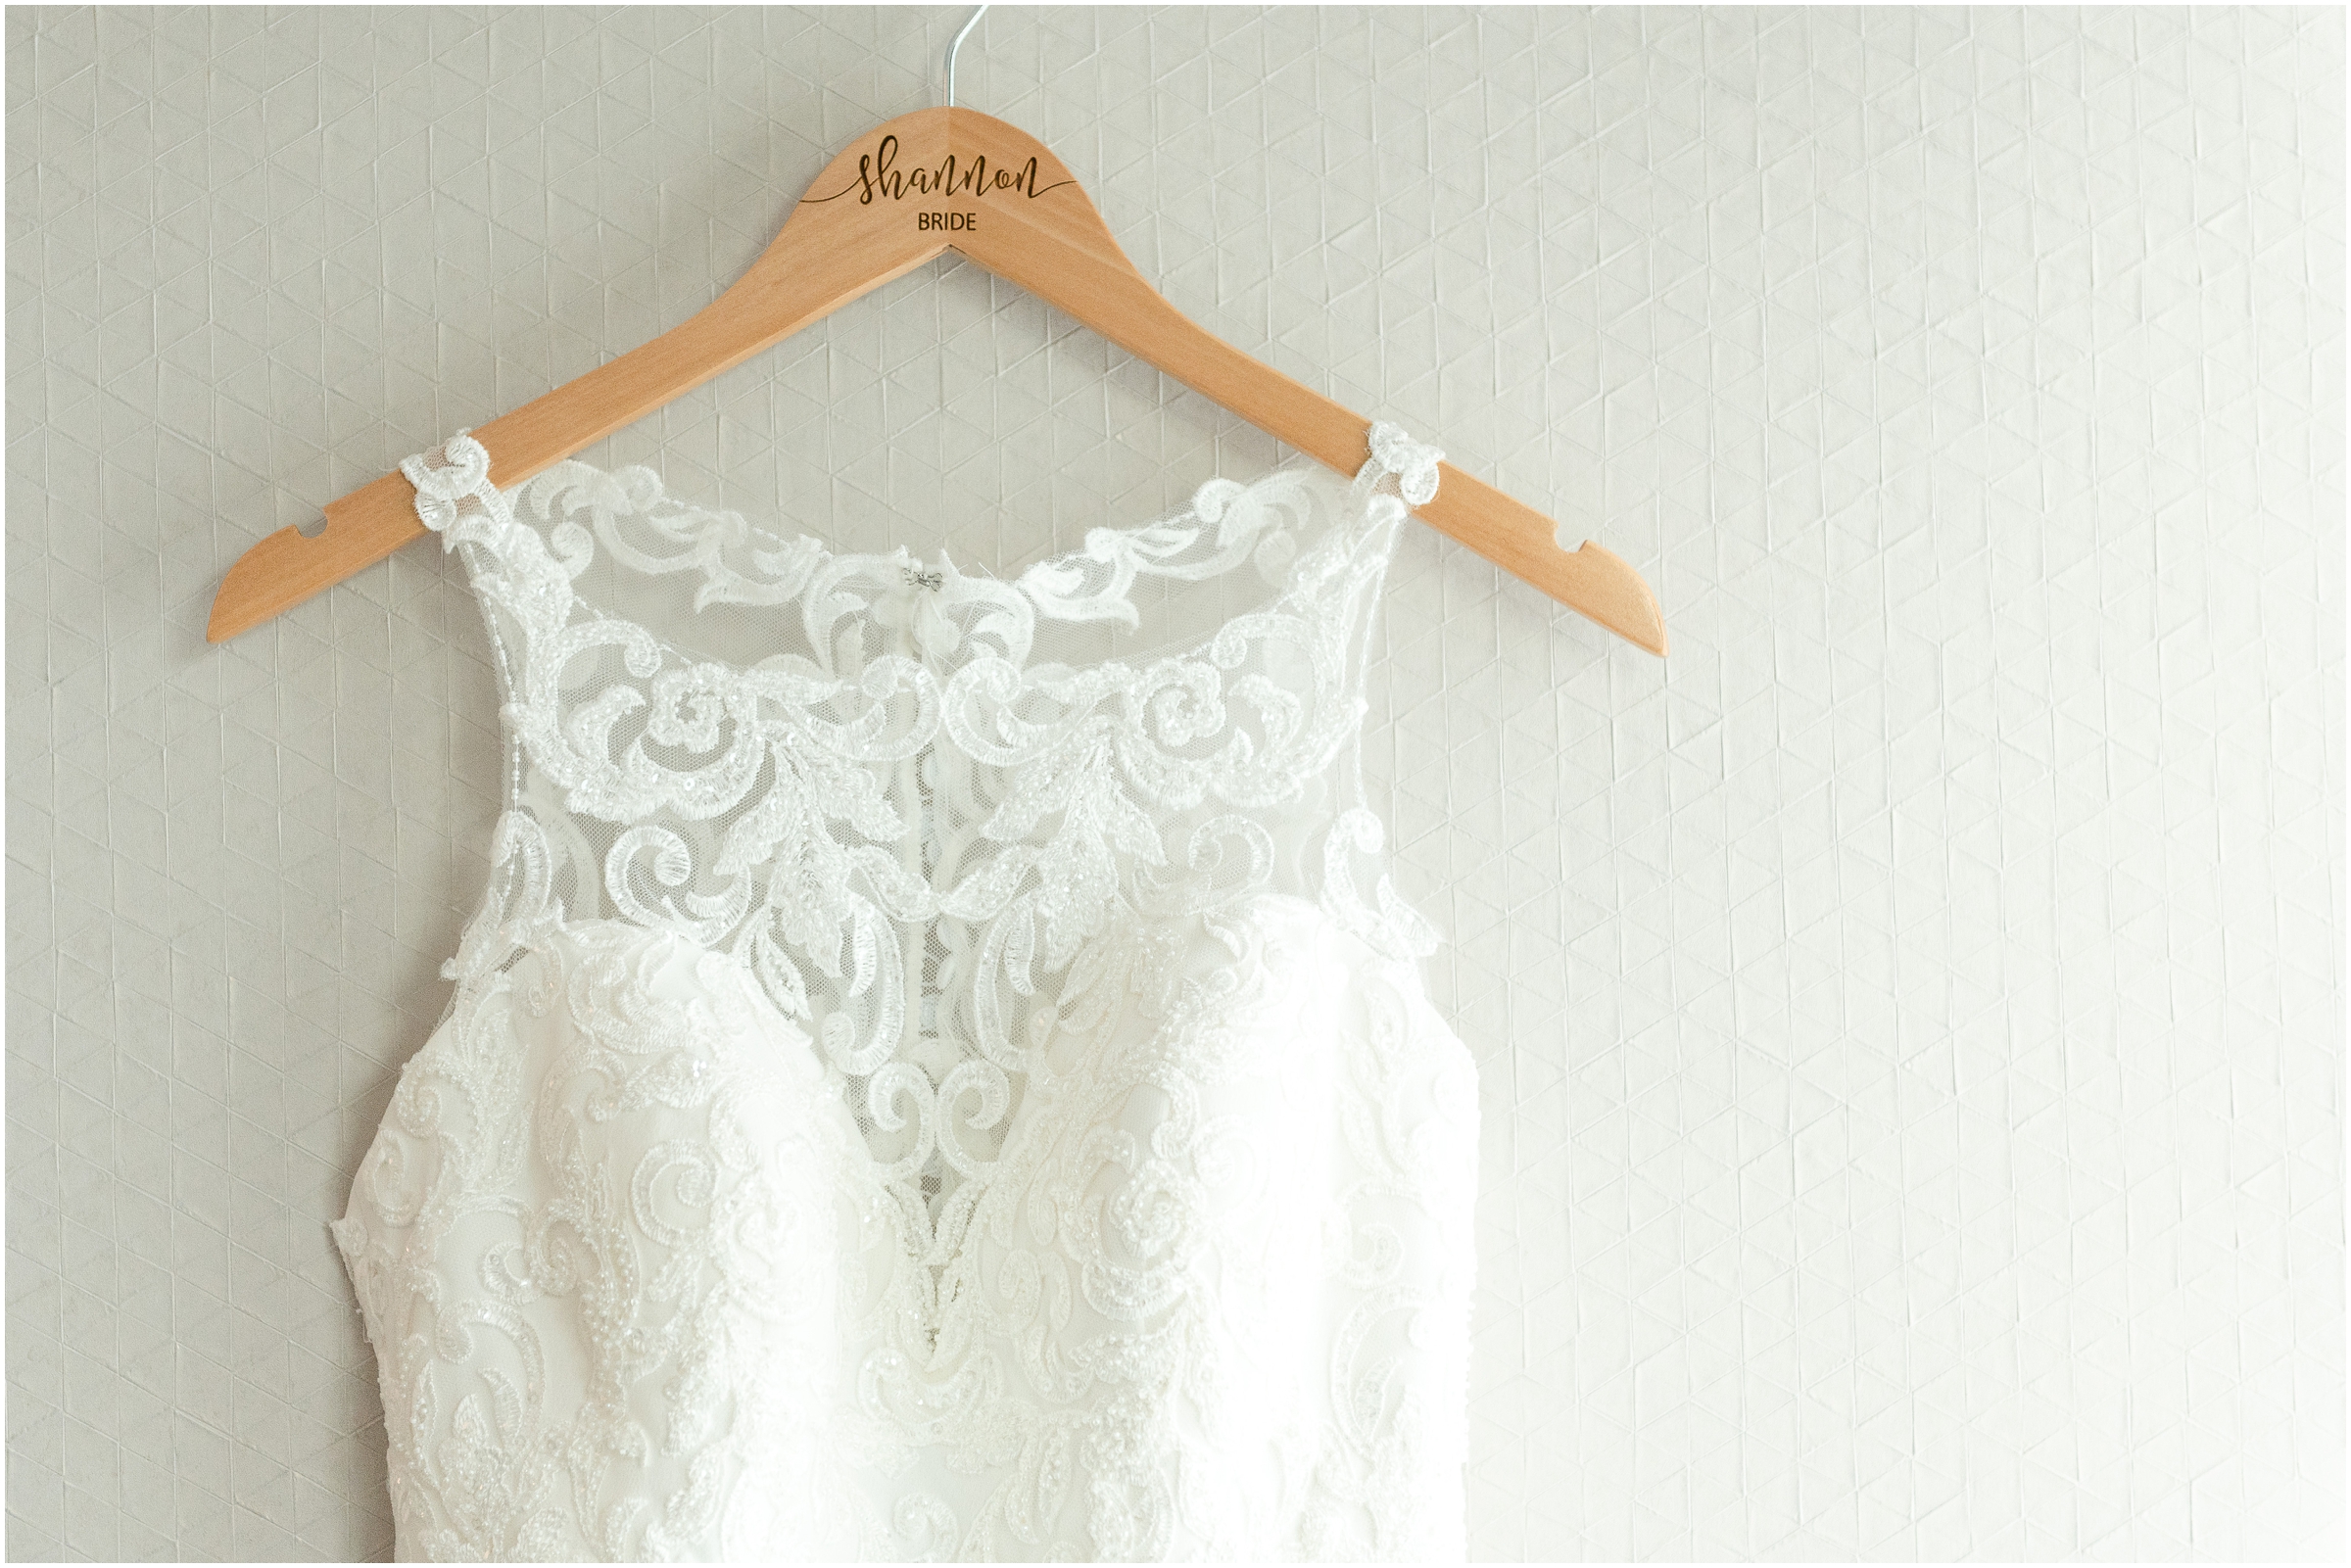 Personalized Dress hanger, Lafayette, In wedding details